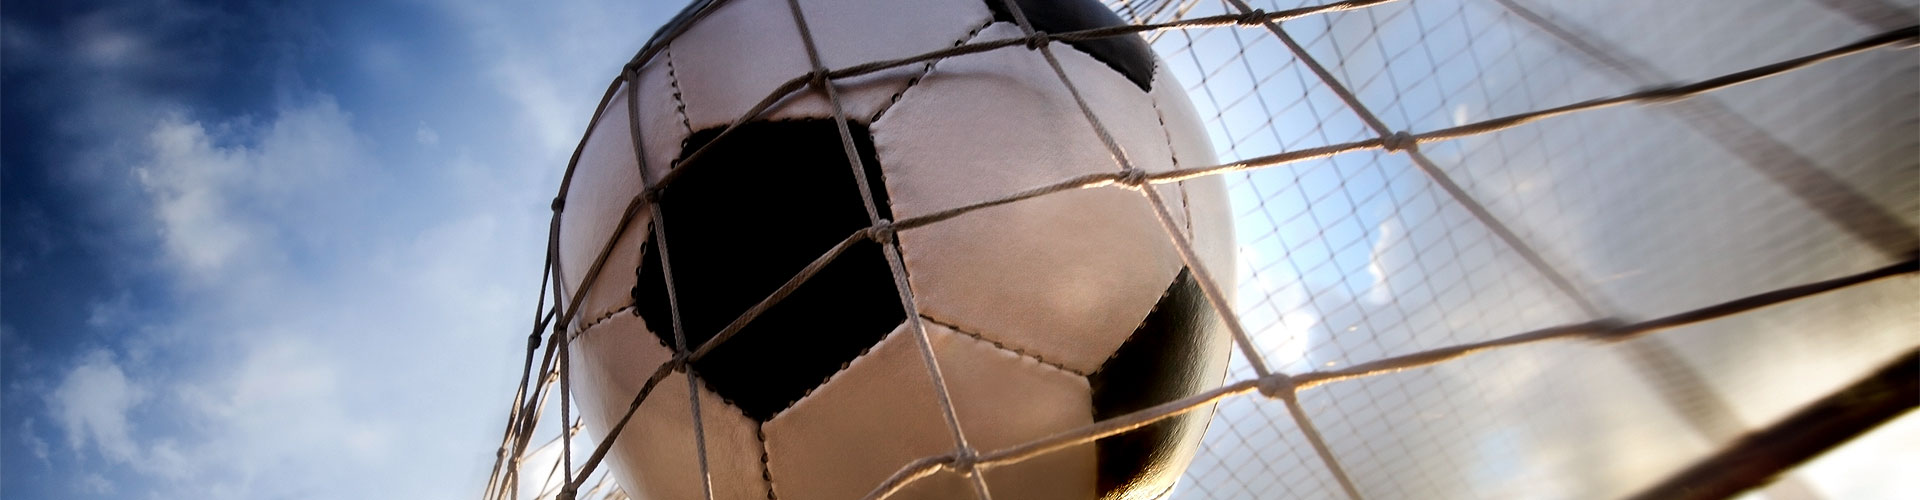 Ver la Eurocopa 2020 de fútbol en vivo en Benaocaz